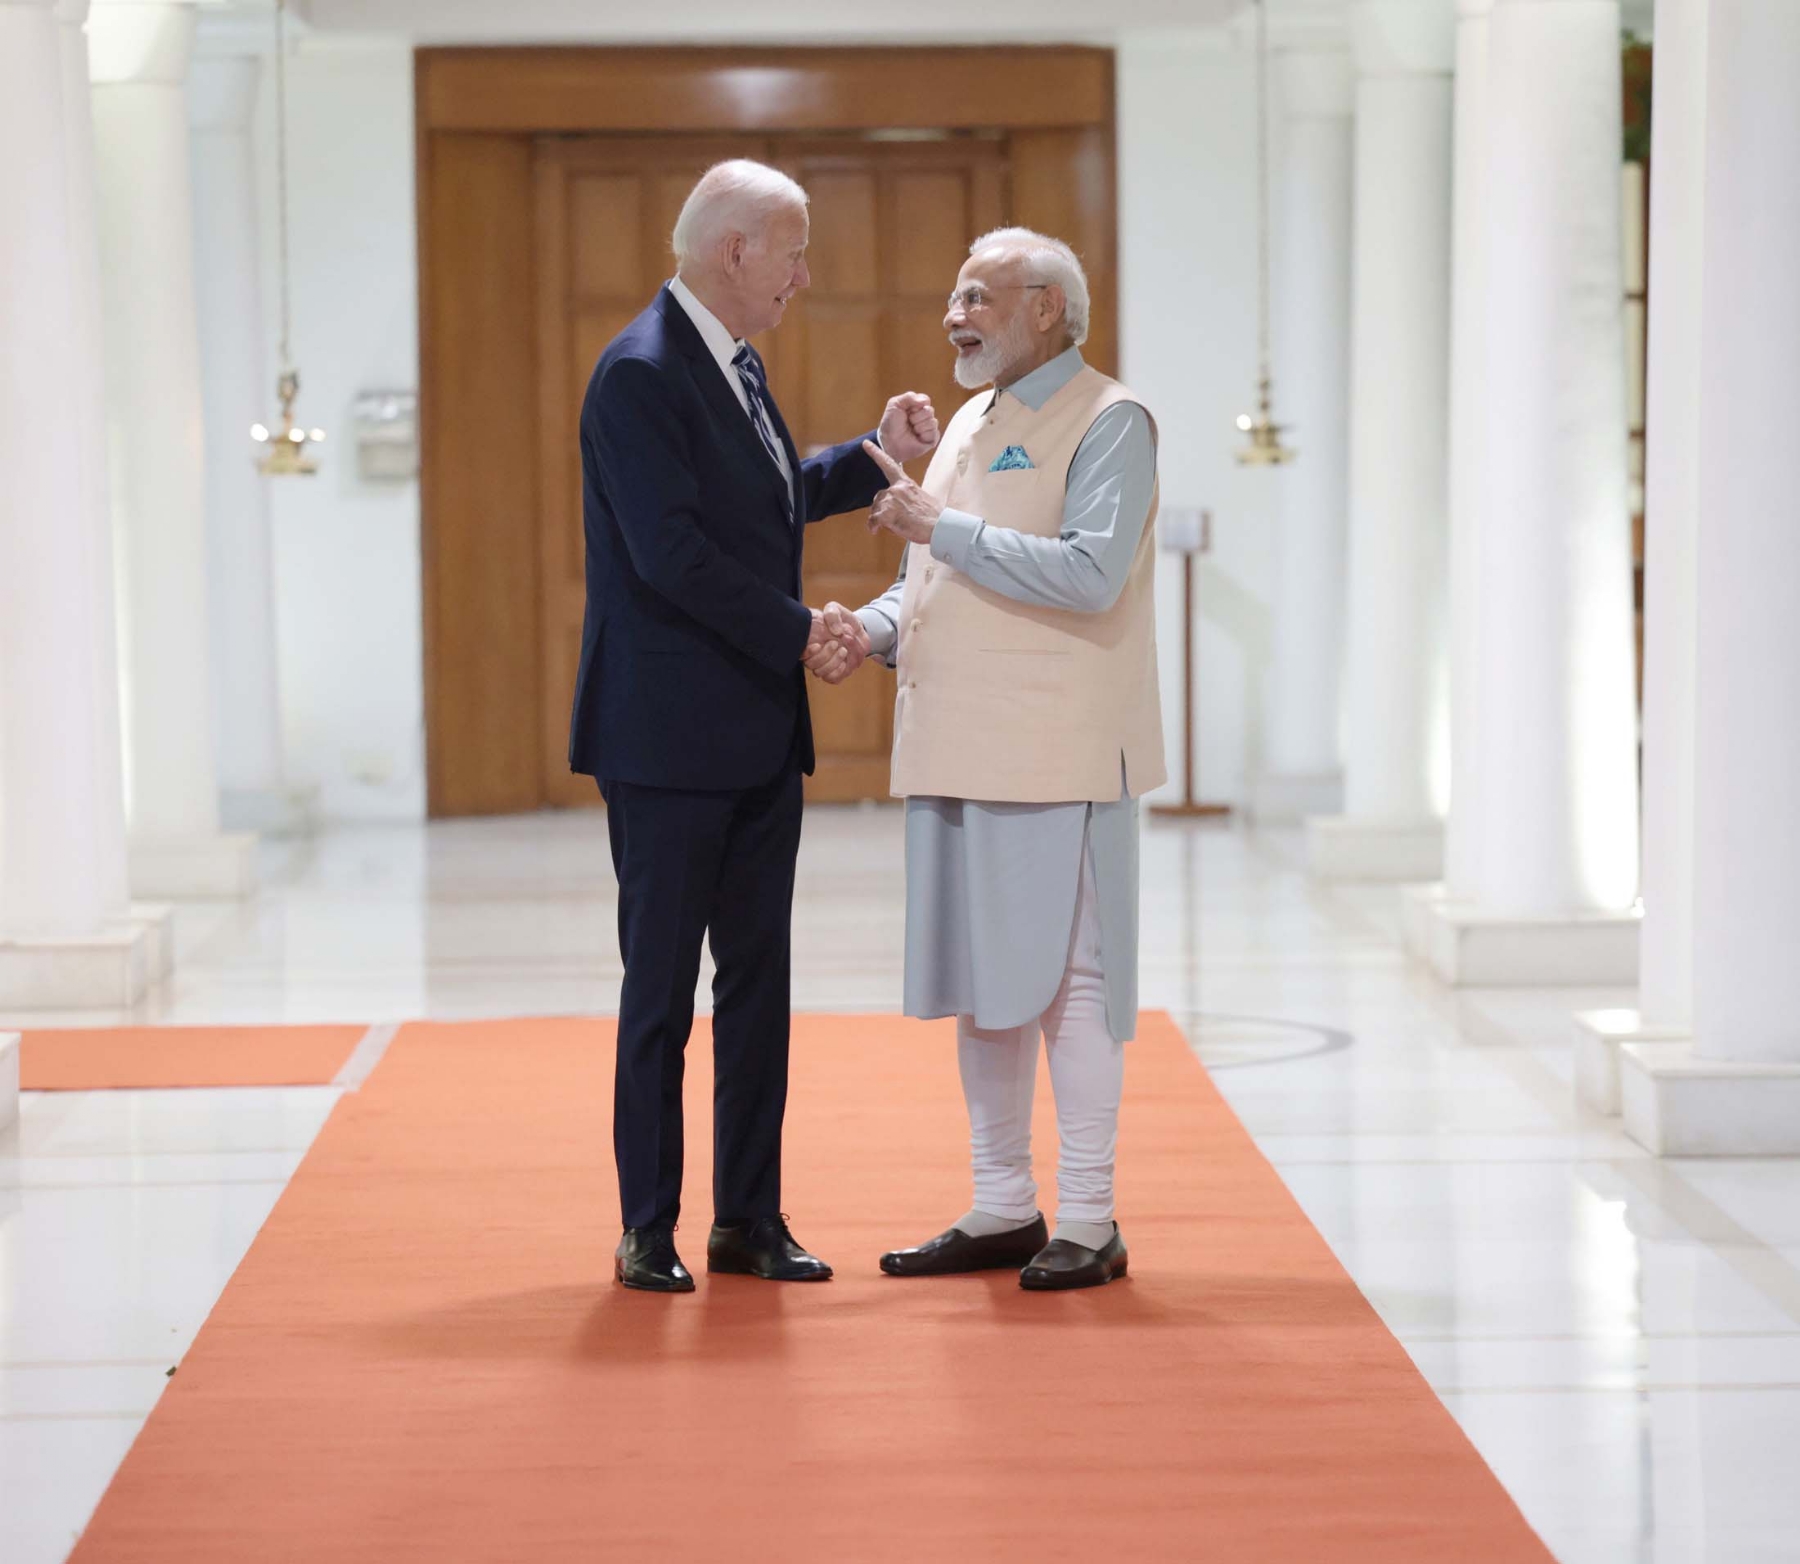 नई दिल्ली में शुक्रवार 8 सितंबर 2023 को प्रधानमंत्री नरेन्द्र मोदी और अमेरिकी राष्ट्रपति जो बिडेन के साथ। हिन्दुस्थान समाचार/फोटो गणेश बिष्ट